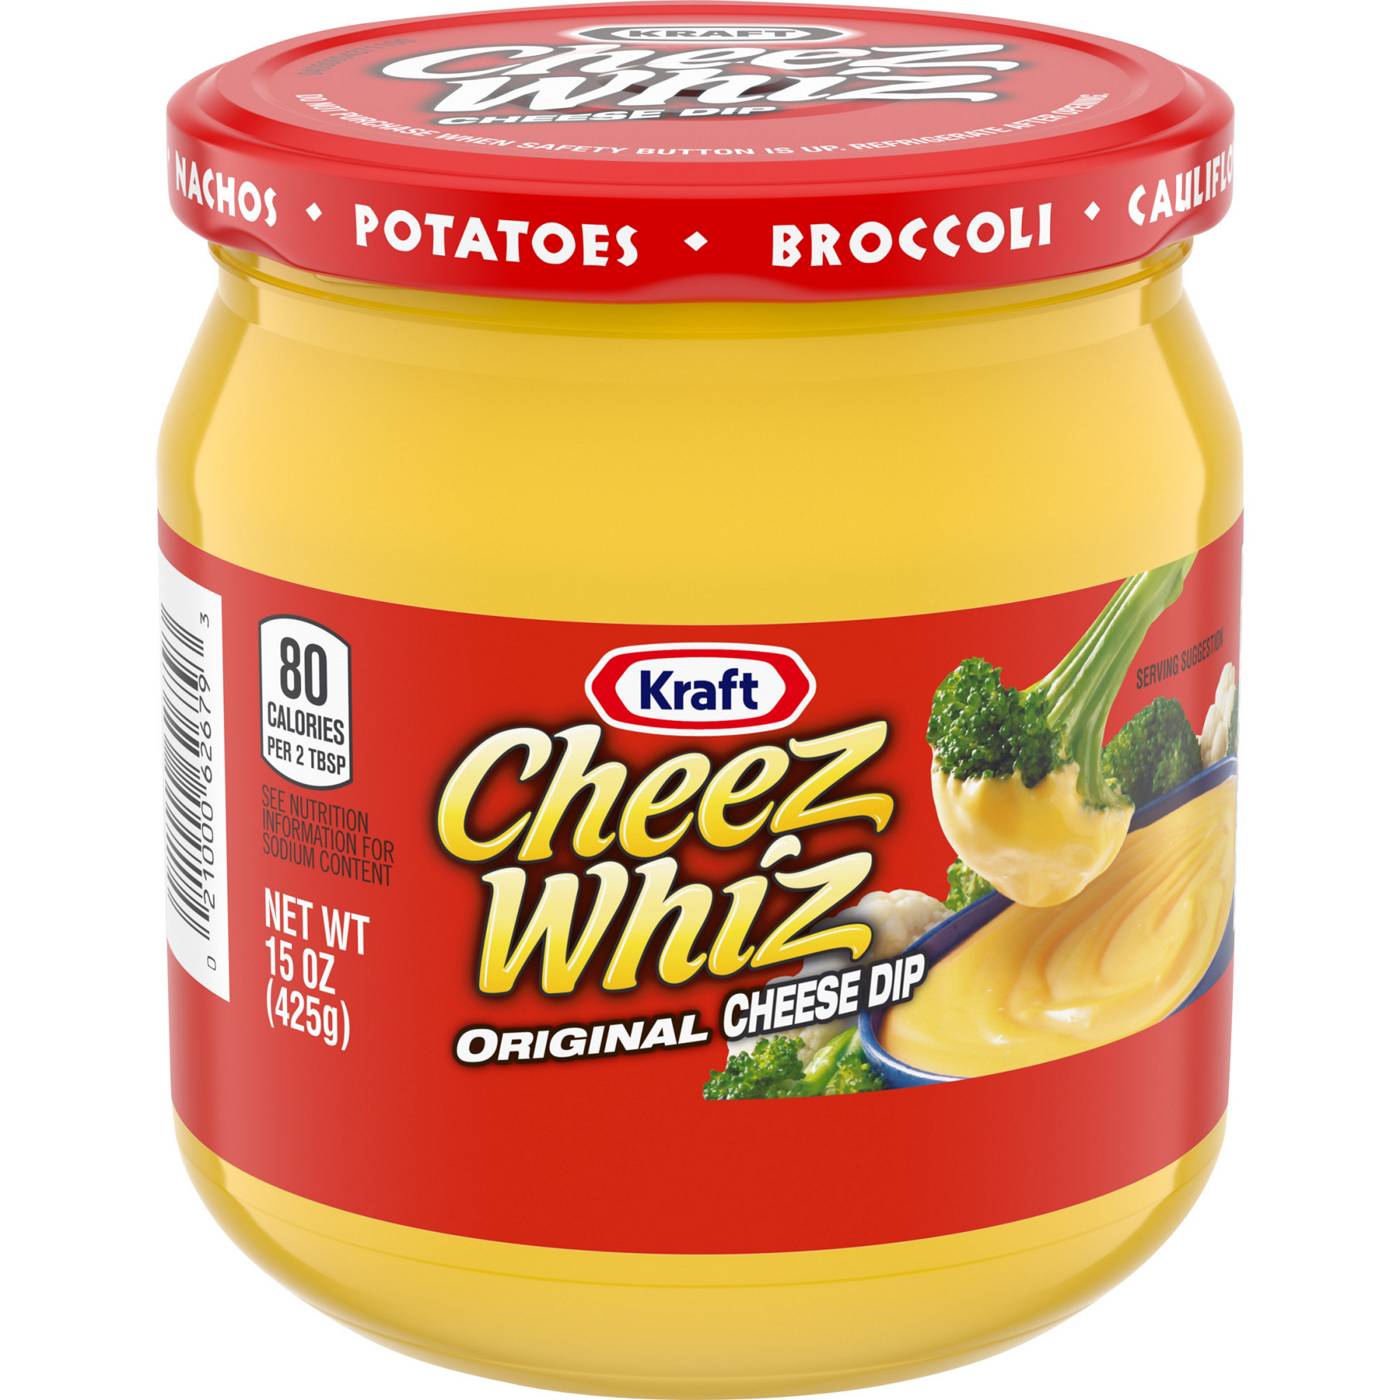 Kraft Cheez Whiz Cheese Dip - Original; image 1 of 7